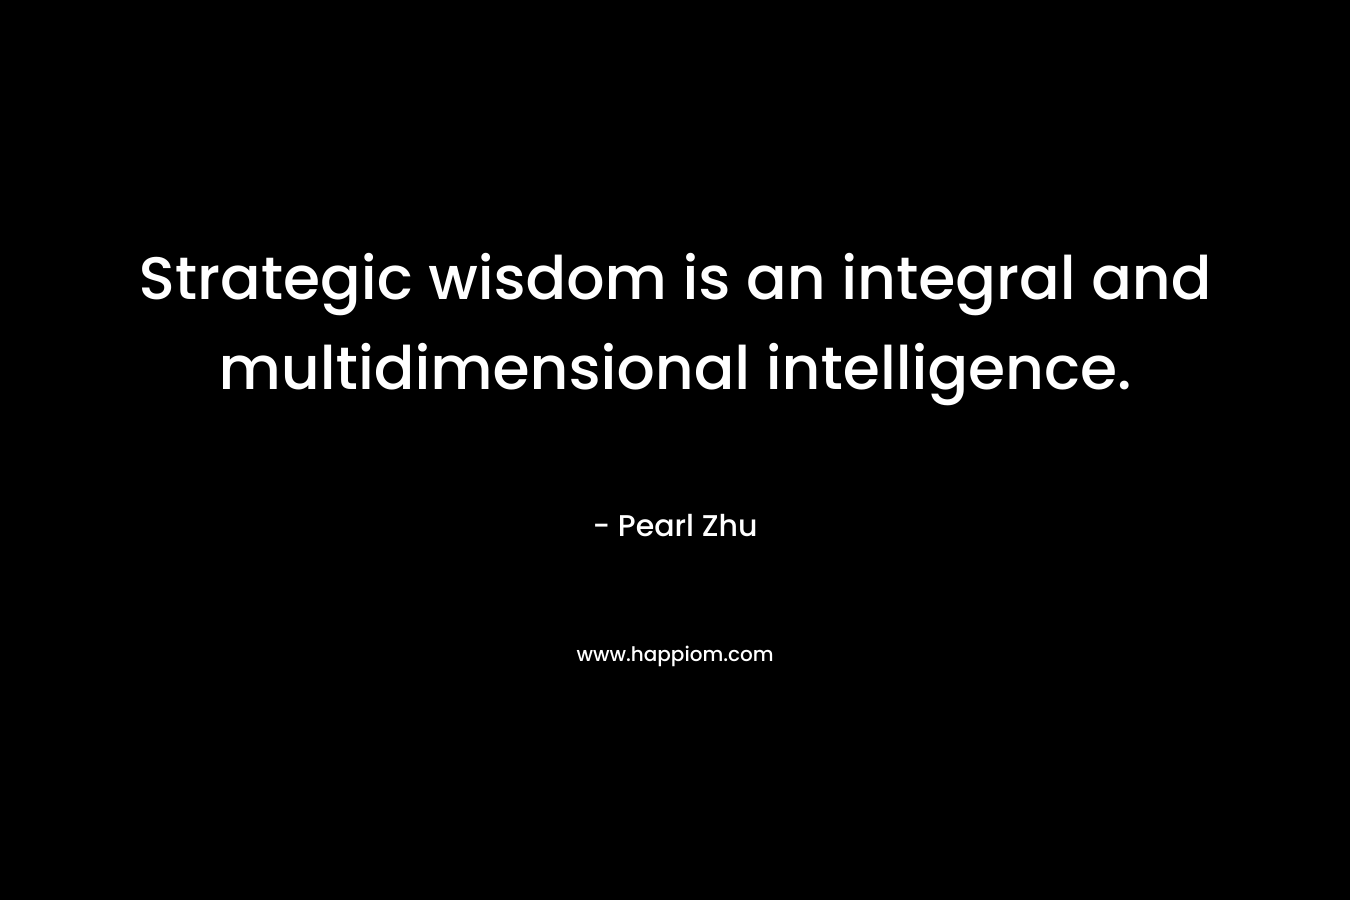 Strategic wisdom is an integral and multidimensional intelligence.